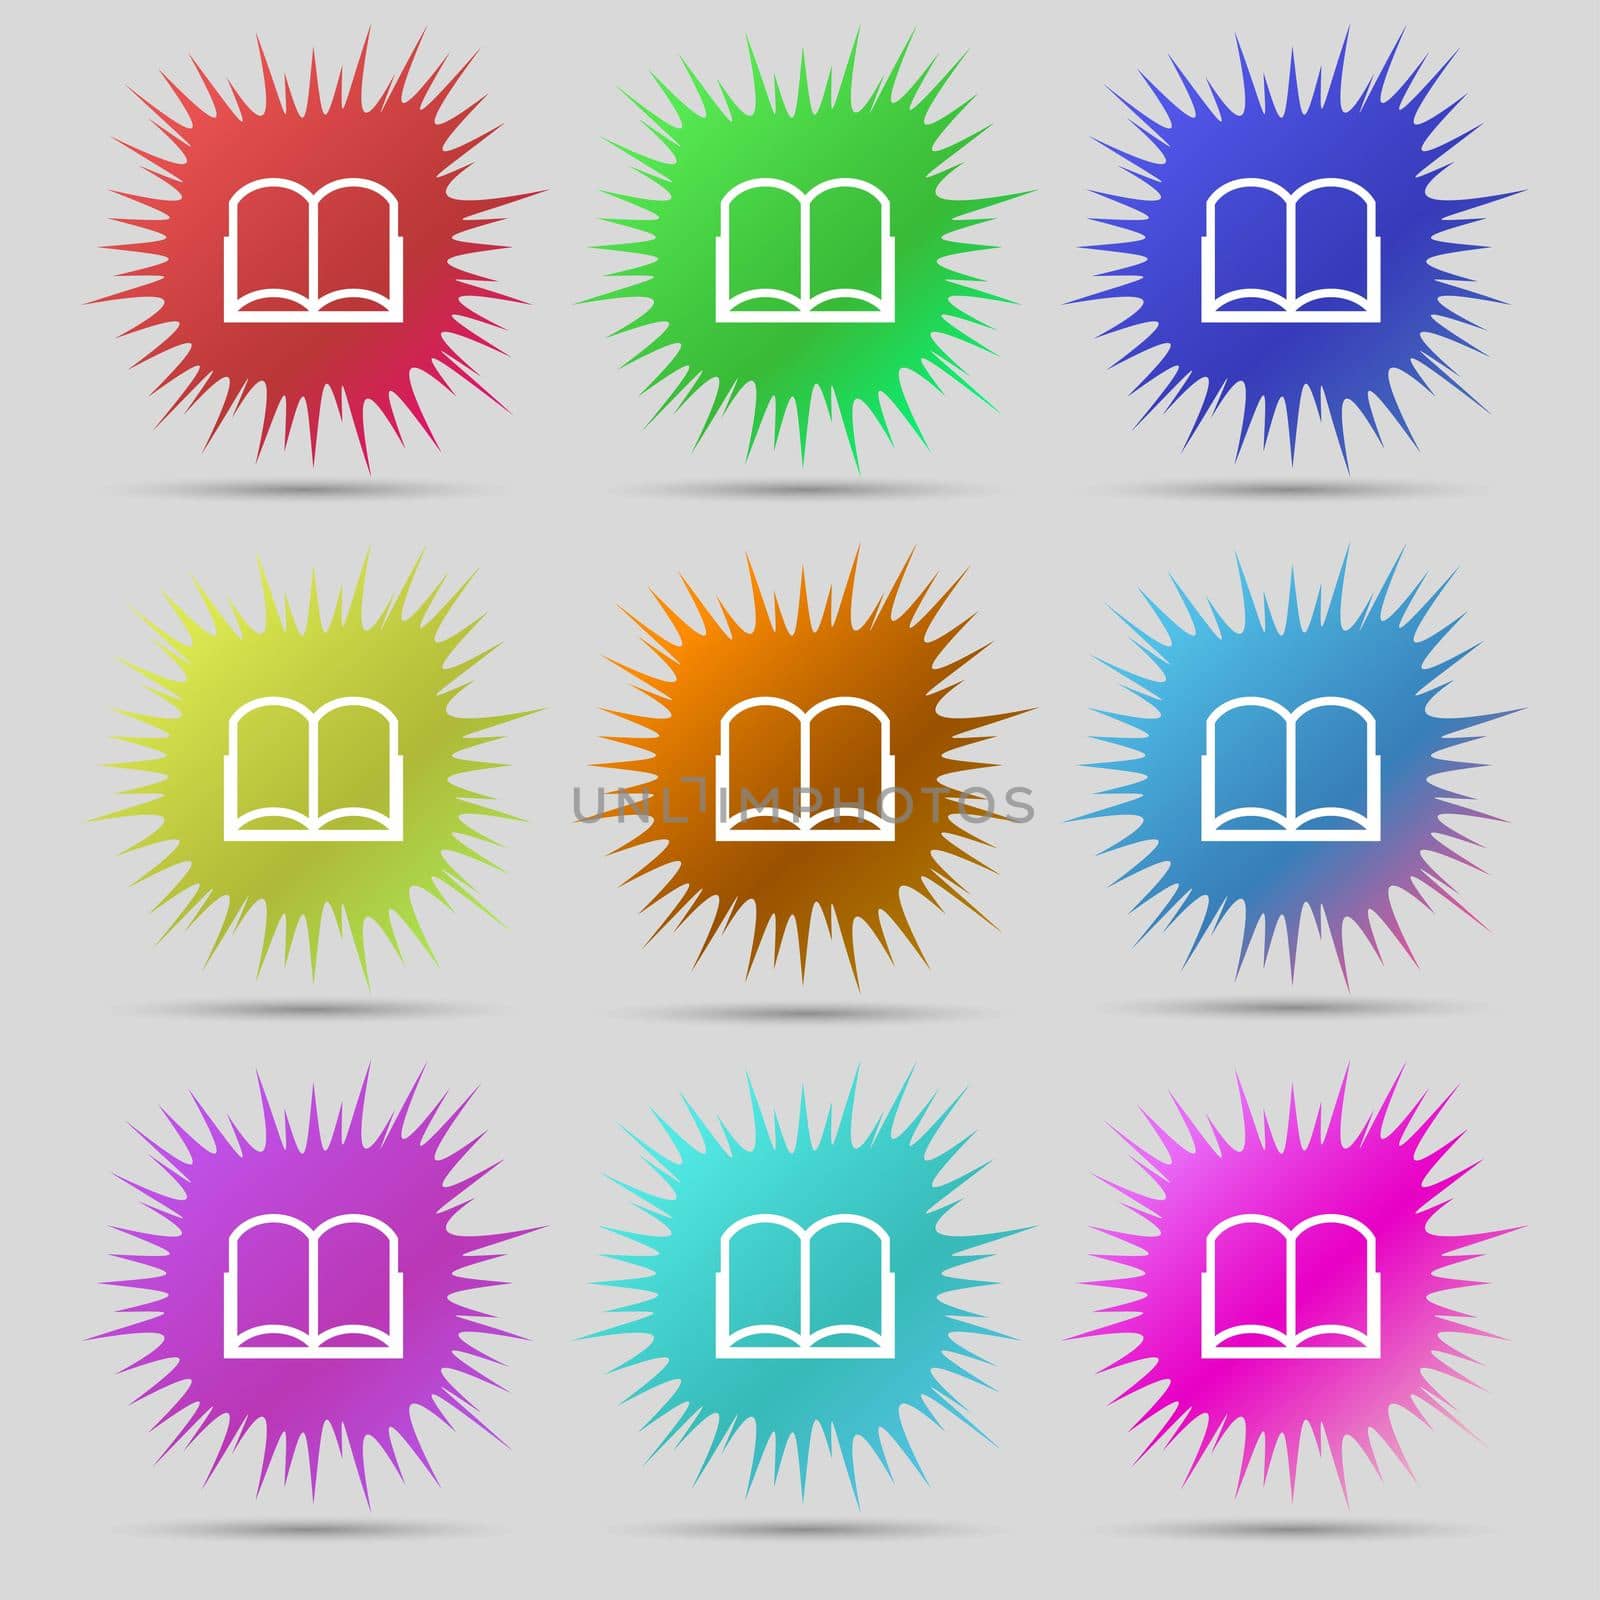 Book sign icon. Open book symbol. Nine original needle buttons. illustration. Raster version